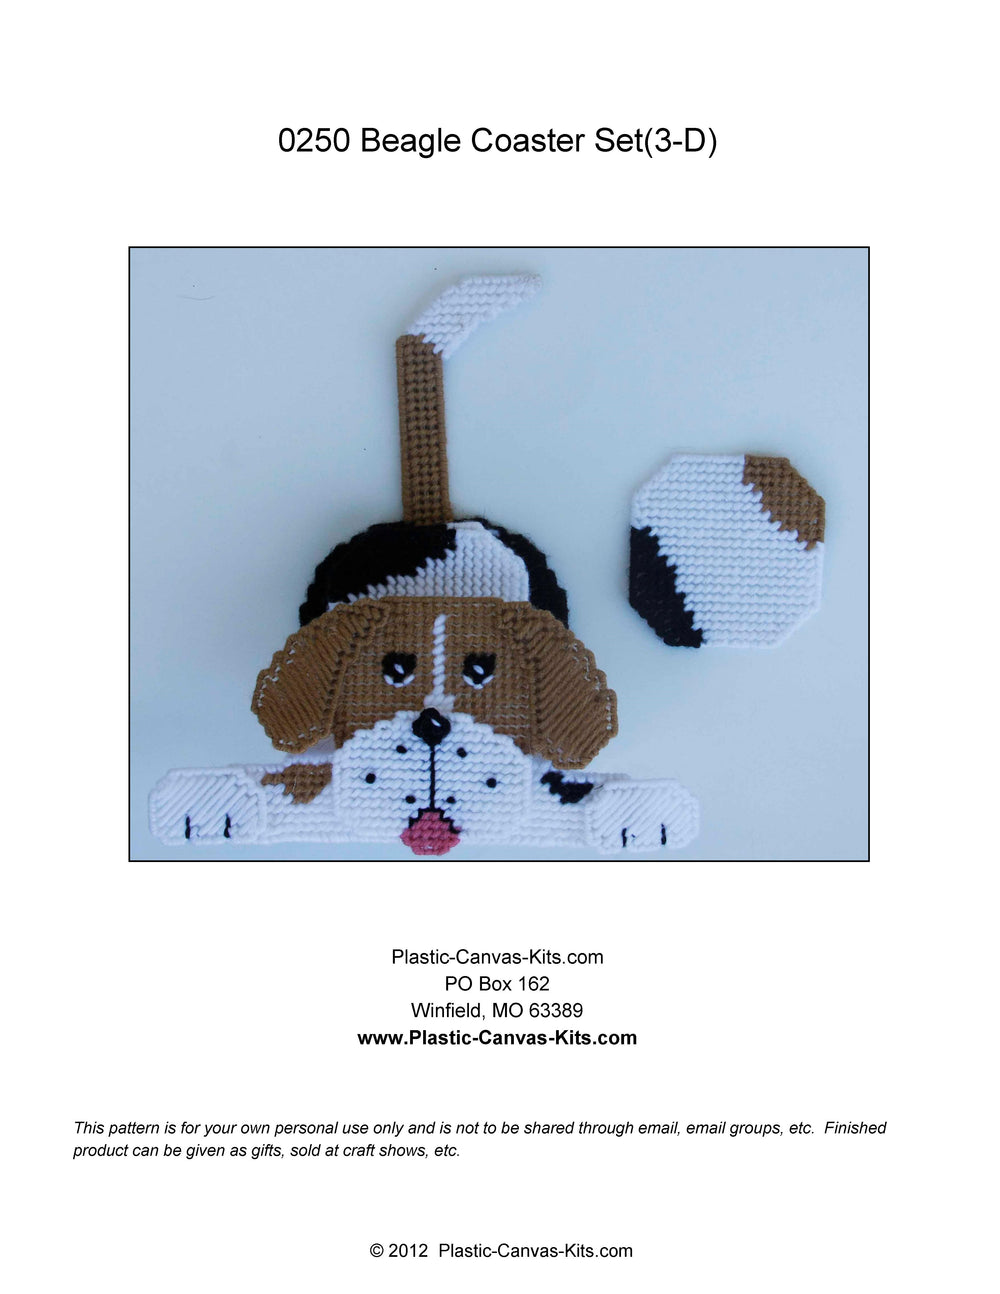 3D Beagle Coaster Set